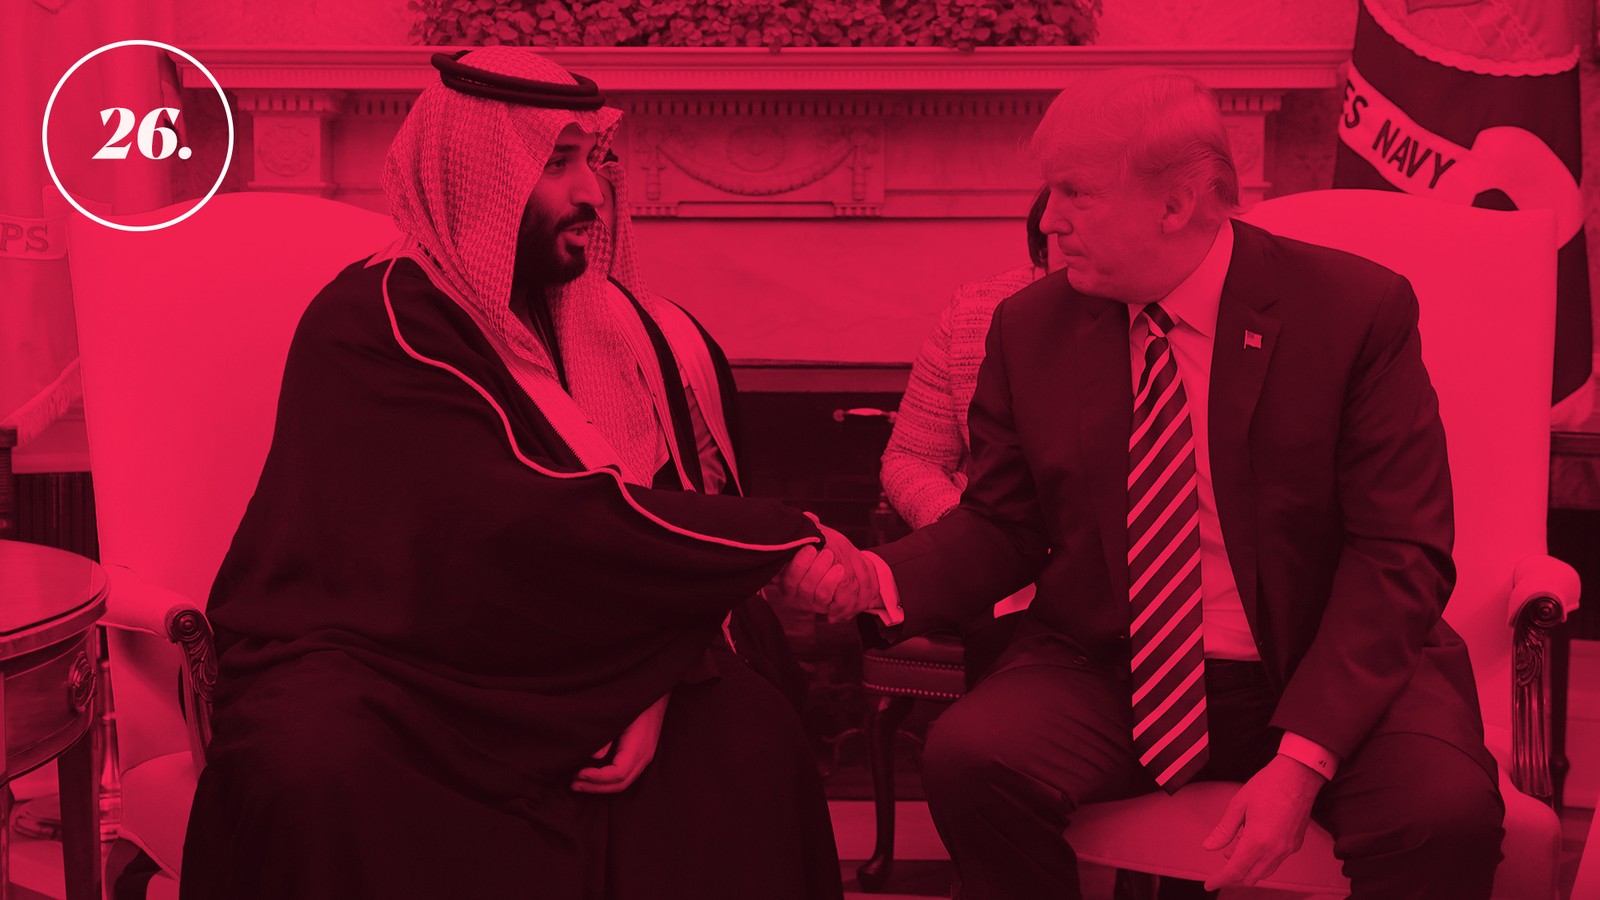 Salman Hd Xx Download - Khashoggi, Trump, And Arms Sales As American Values - The Atlantic